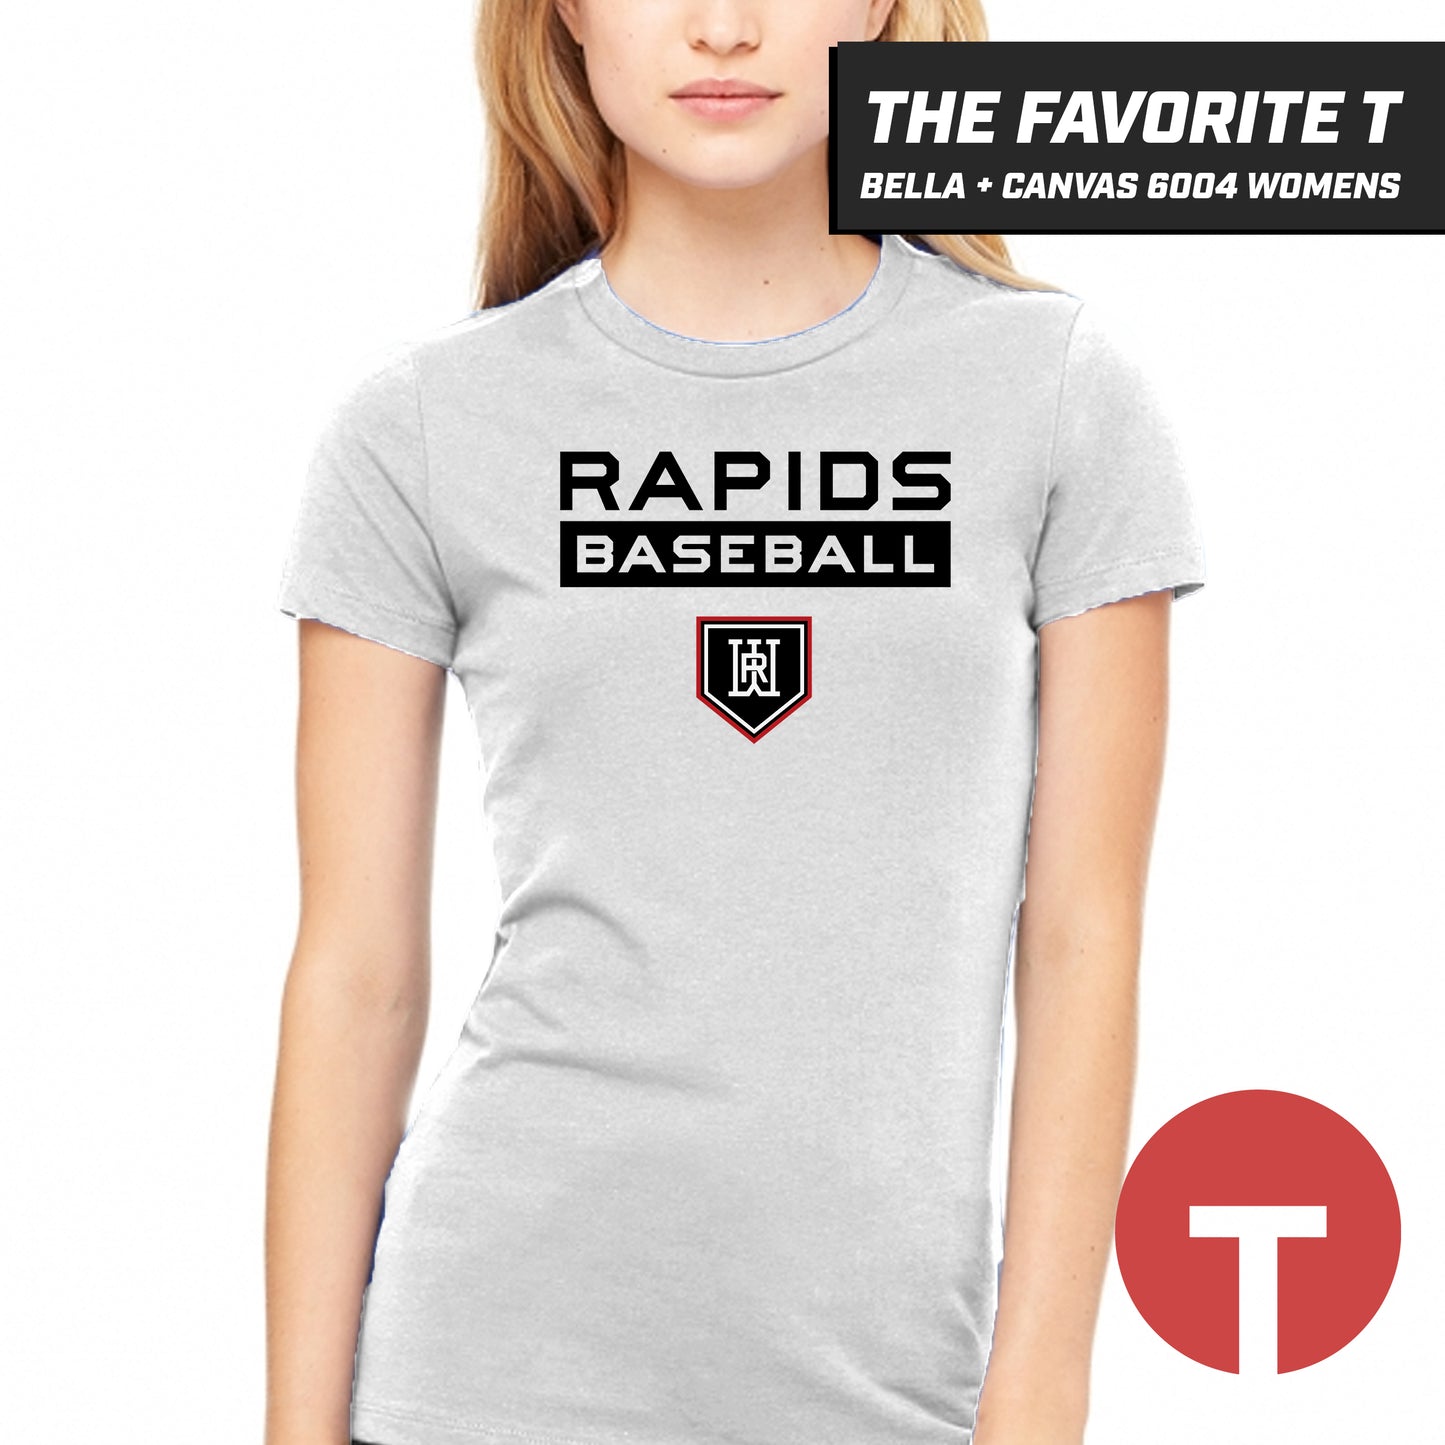 Rapids Baseball - Bella+Canvas 6004 Womens "Favorite T" - LOGO 4